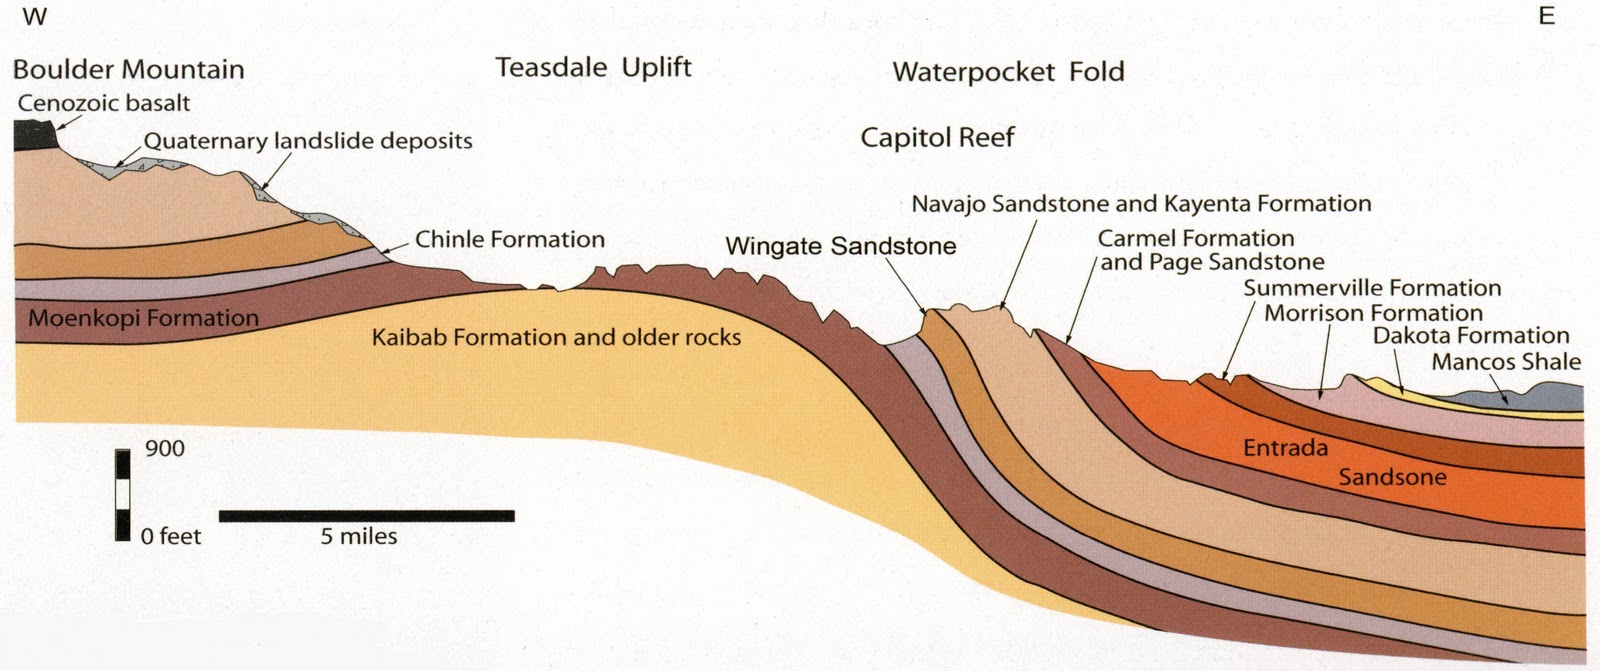 Геология парка Капитол-Риф, Юта, США.